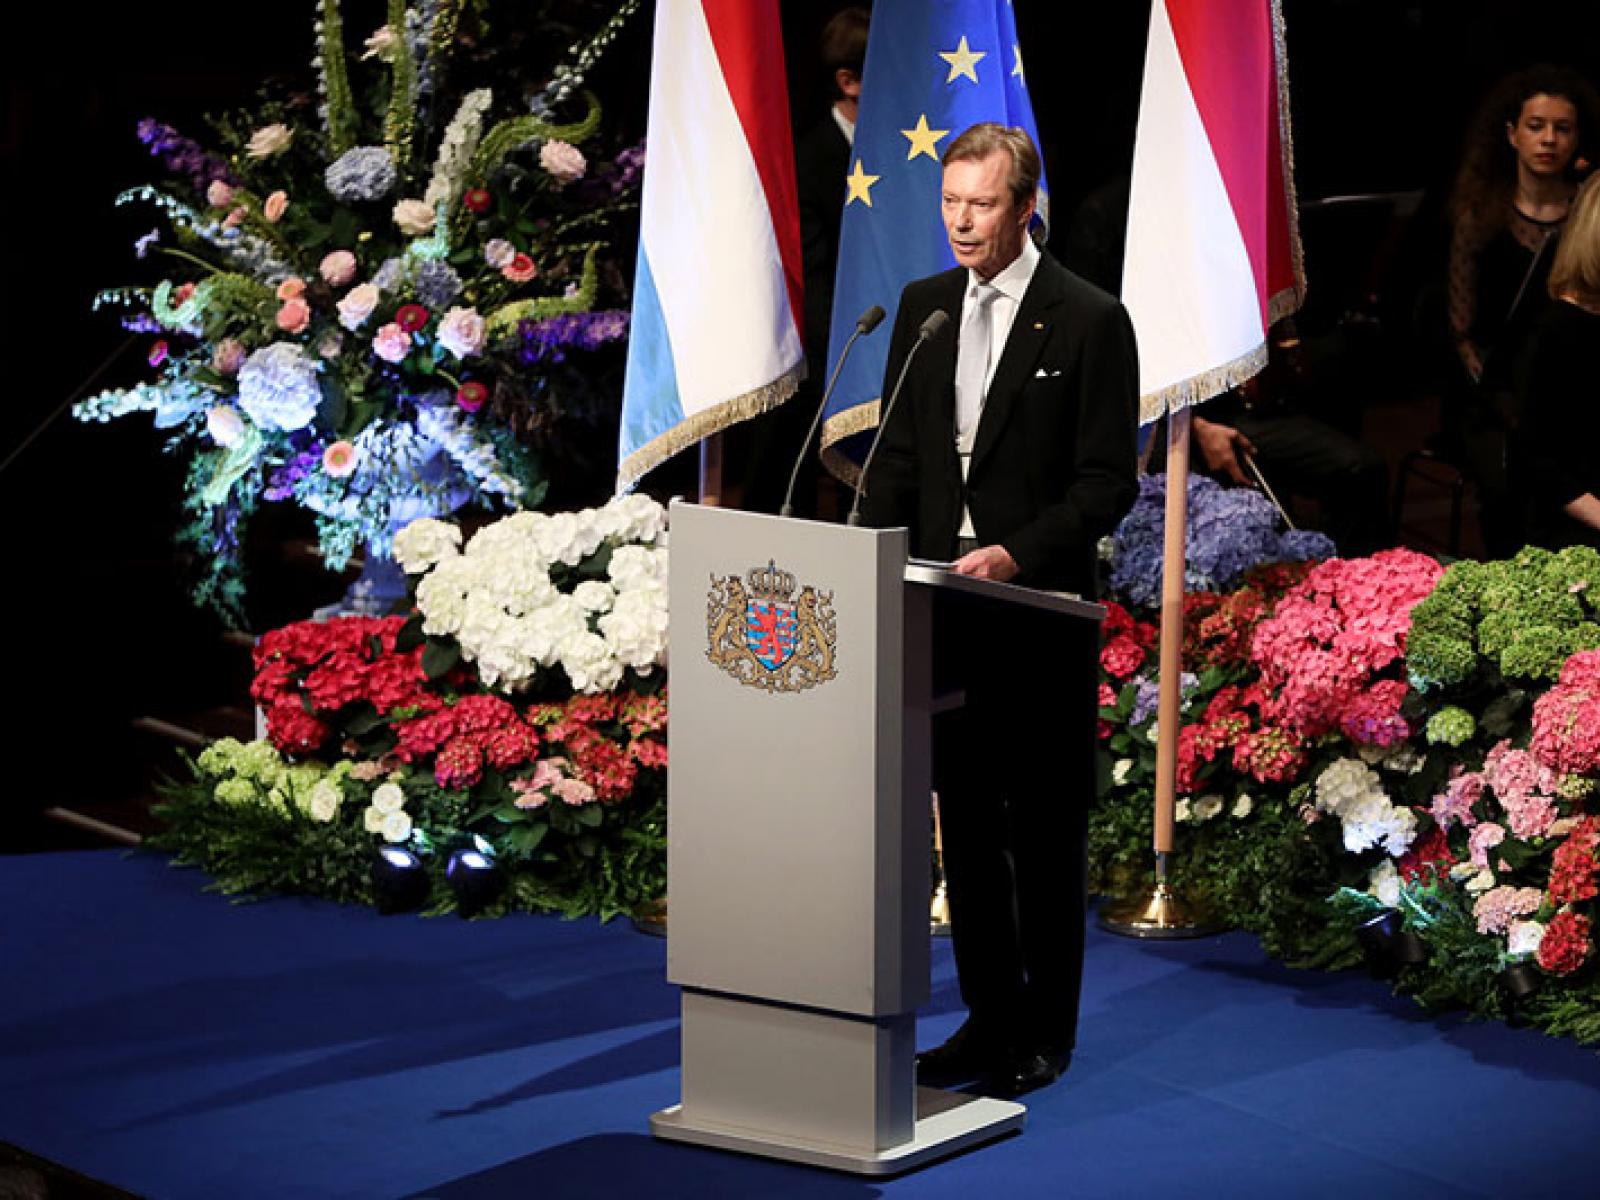 Speech by the Grand Duke